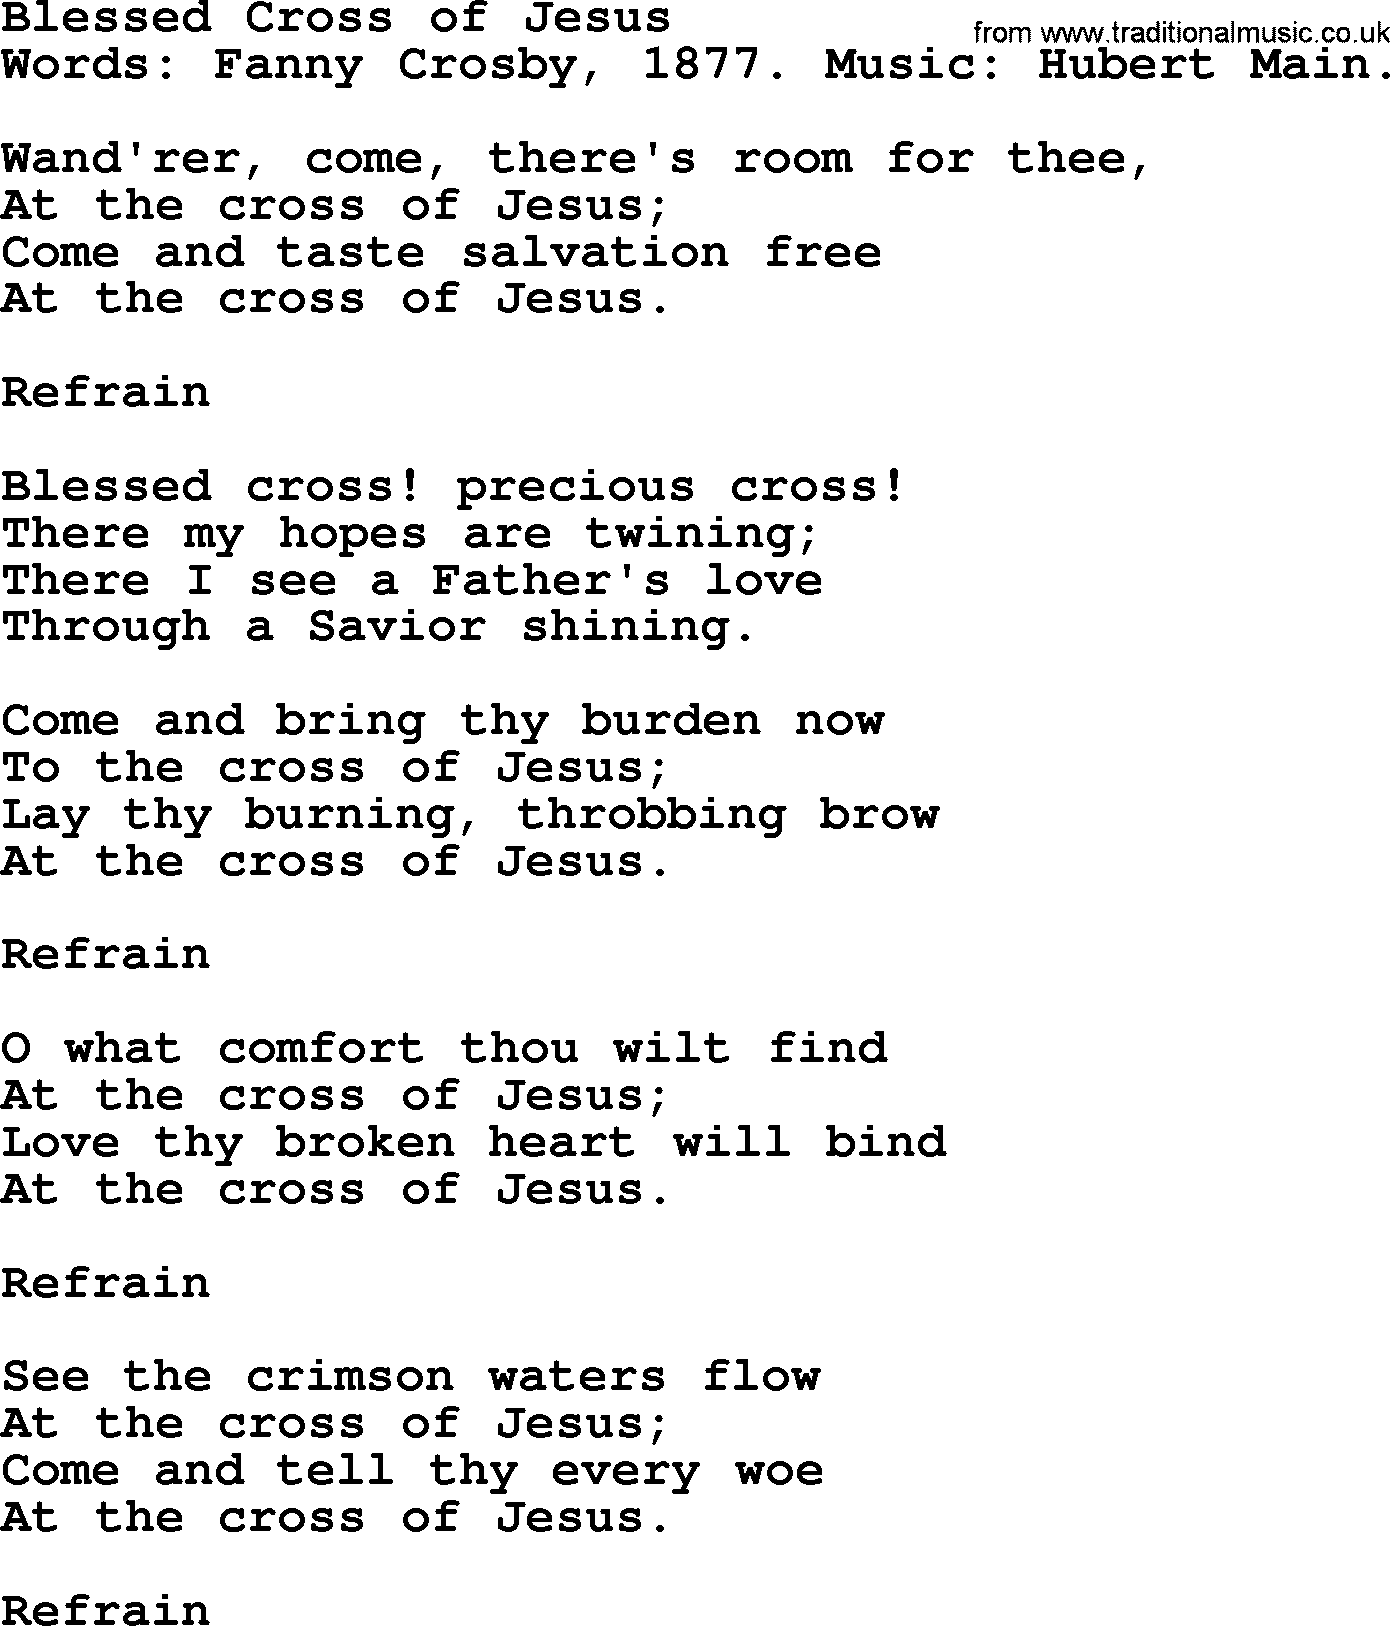 Fanny Crosby song: Blessed Cross Of Jesus, lyrics